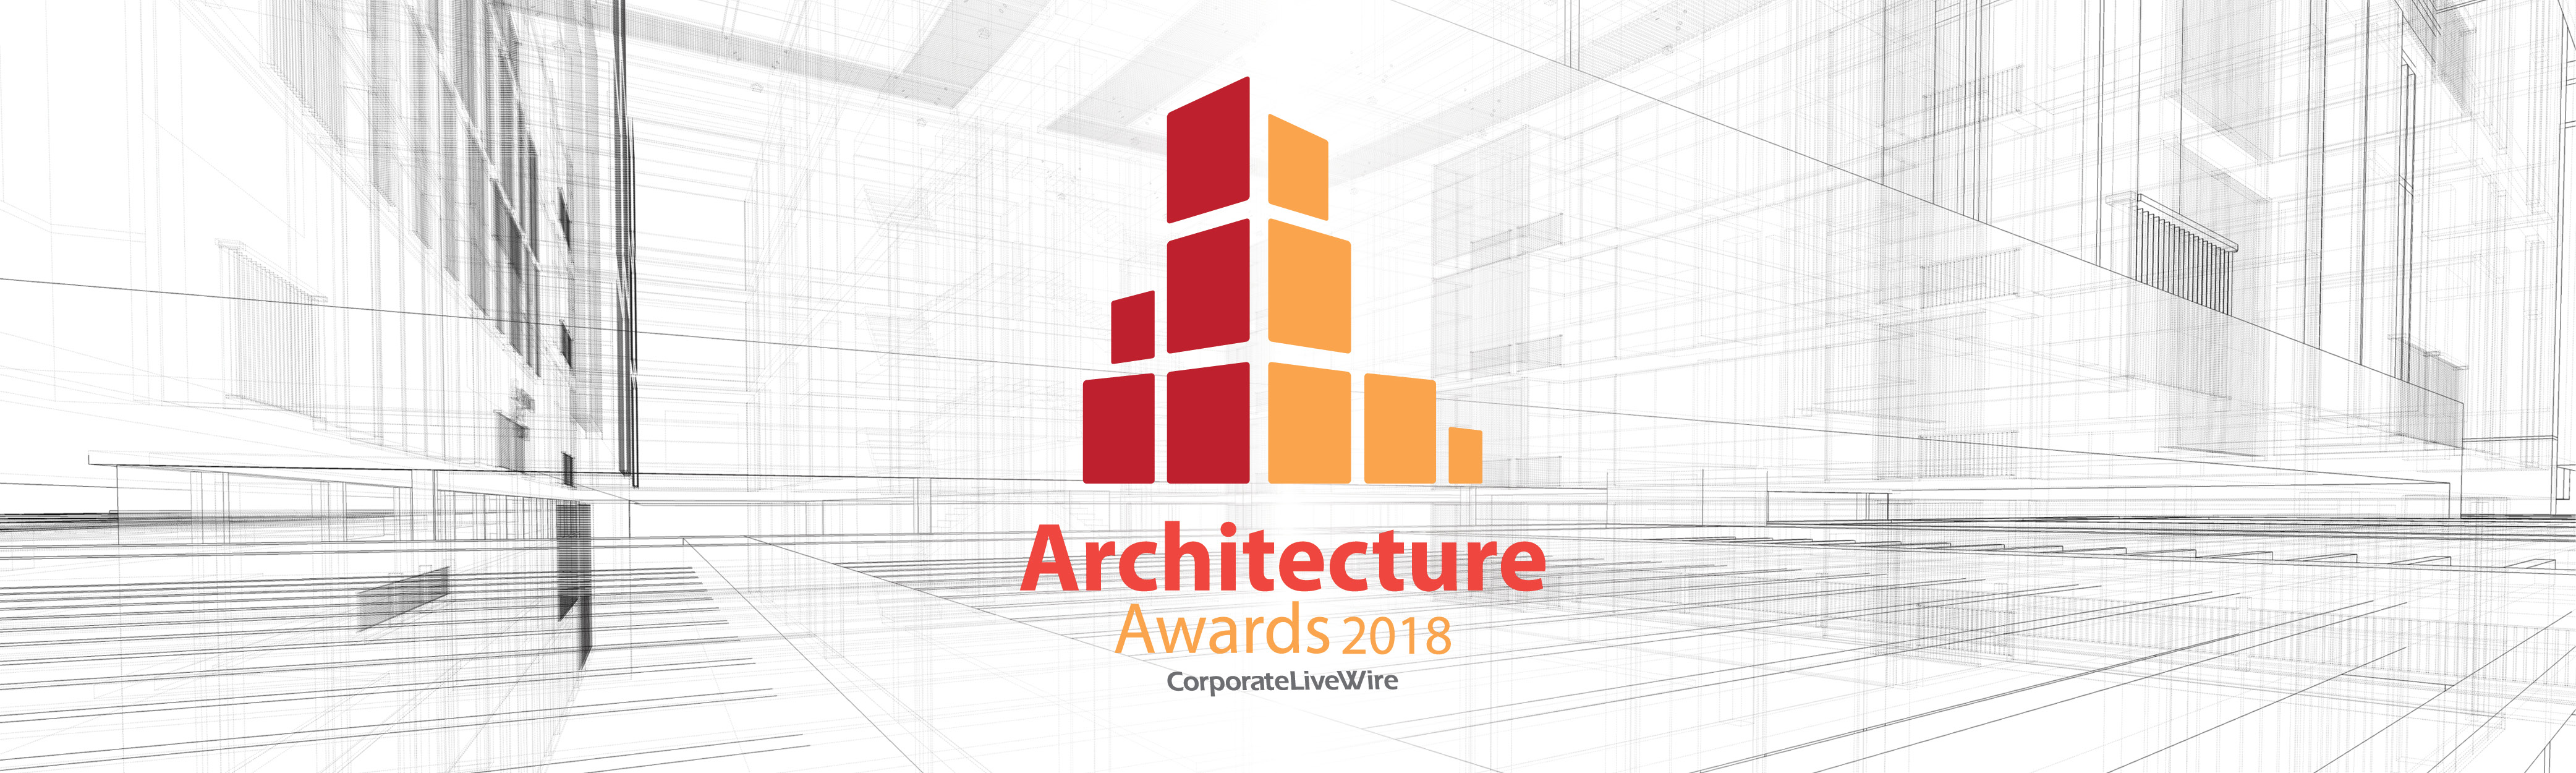 Architecture Awards 2018